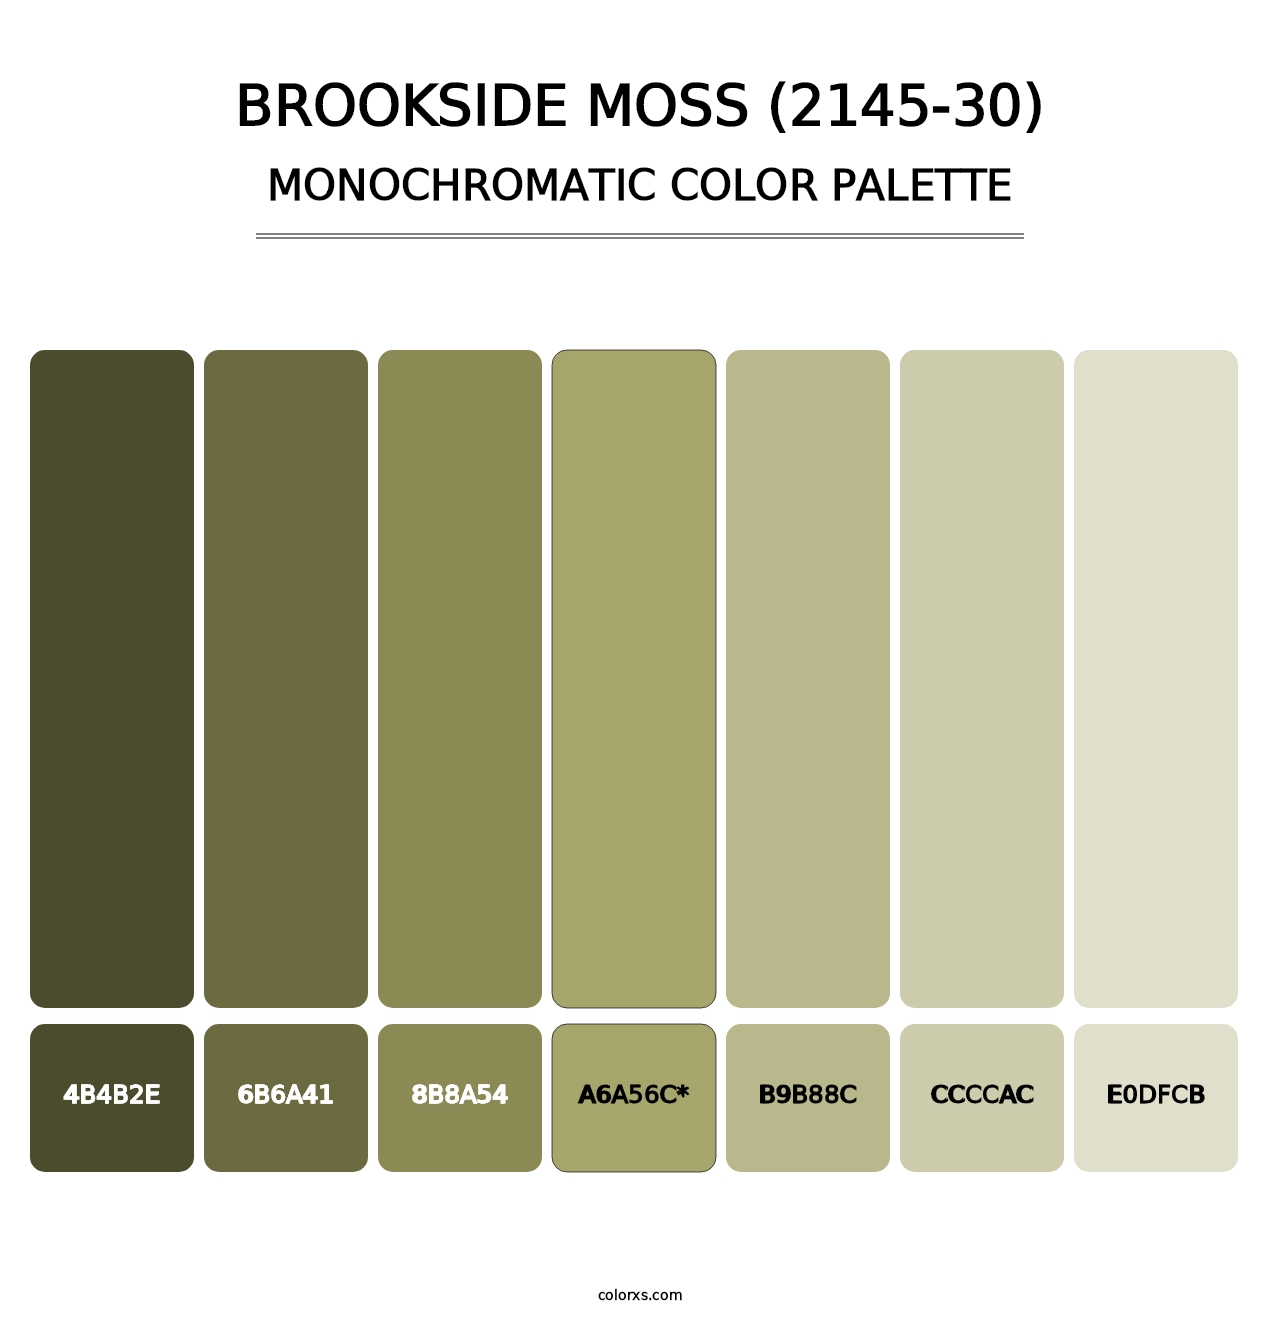 Brookside Moss (2145-30) - Monochromatic Color Palette